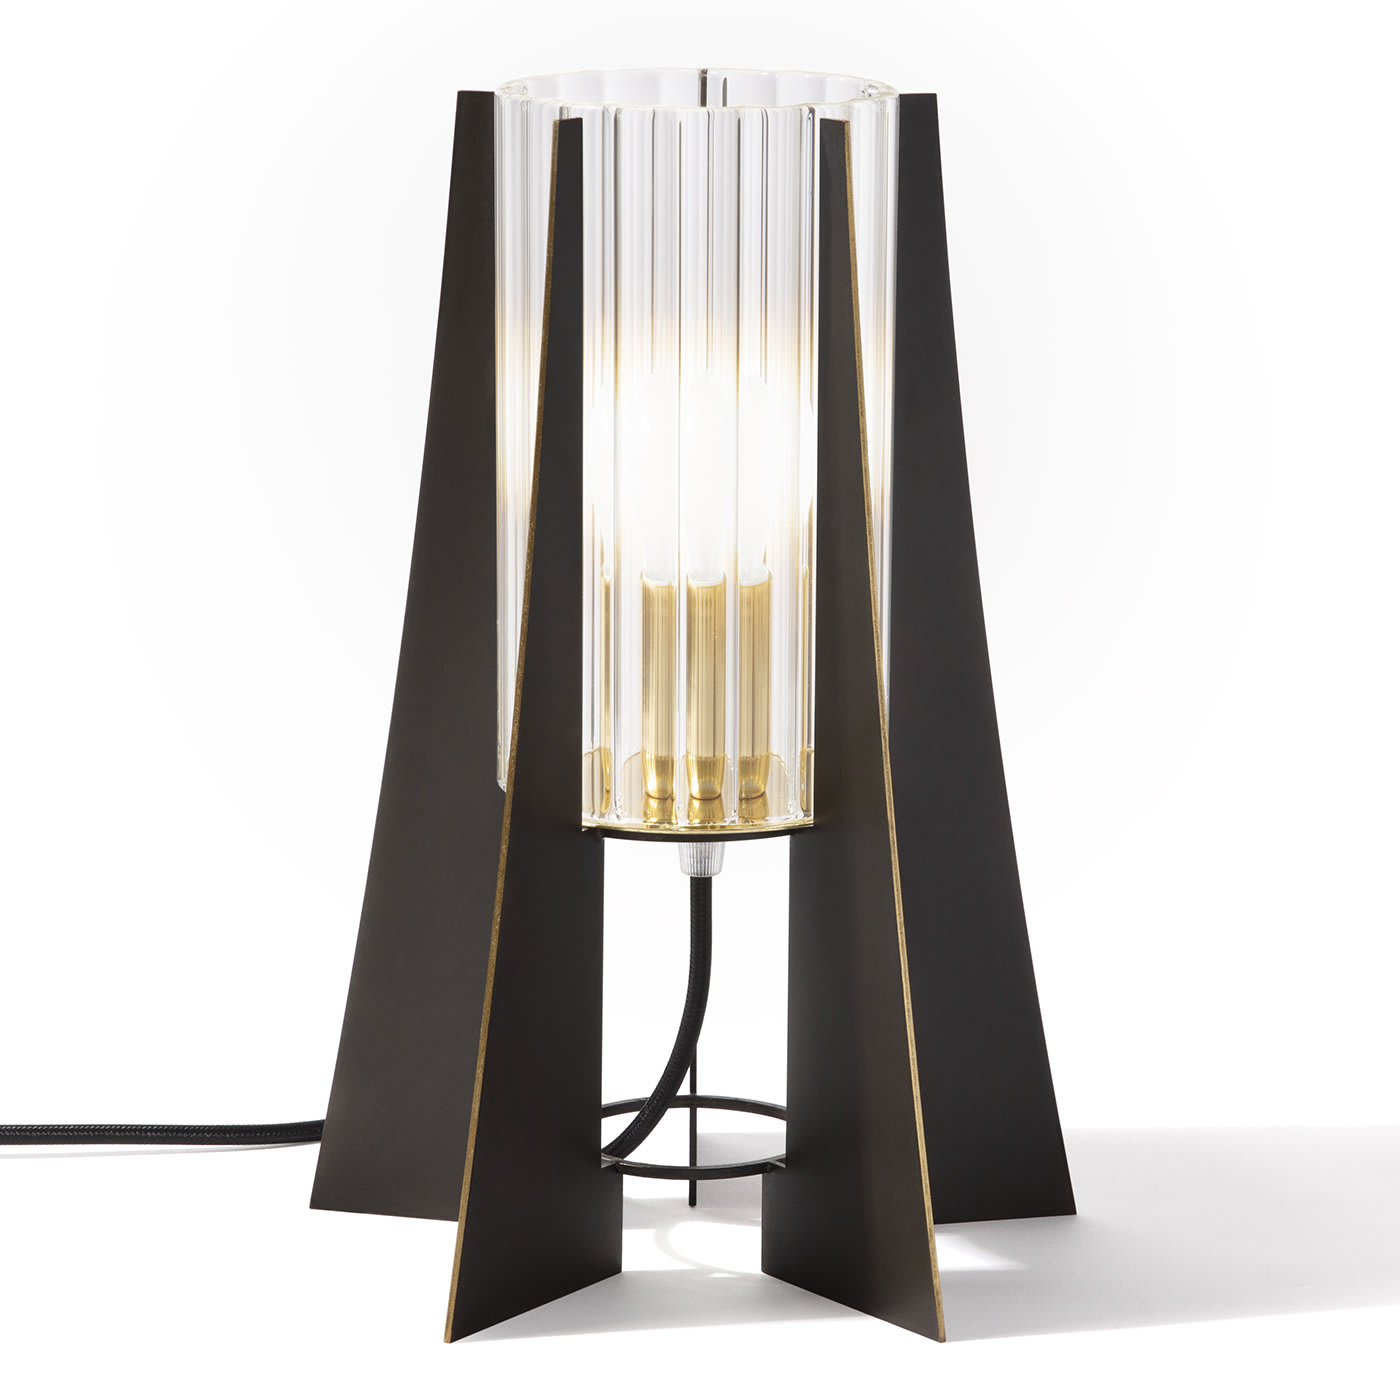 TPLG2 Black Brass Table Lamp by GoodMorning studio - Daythings